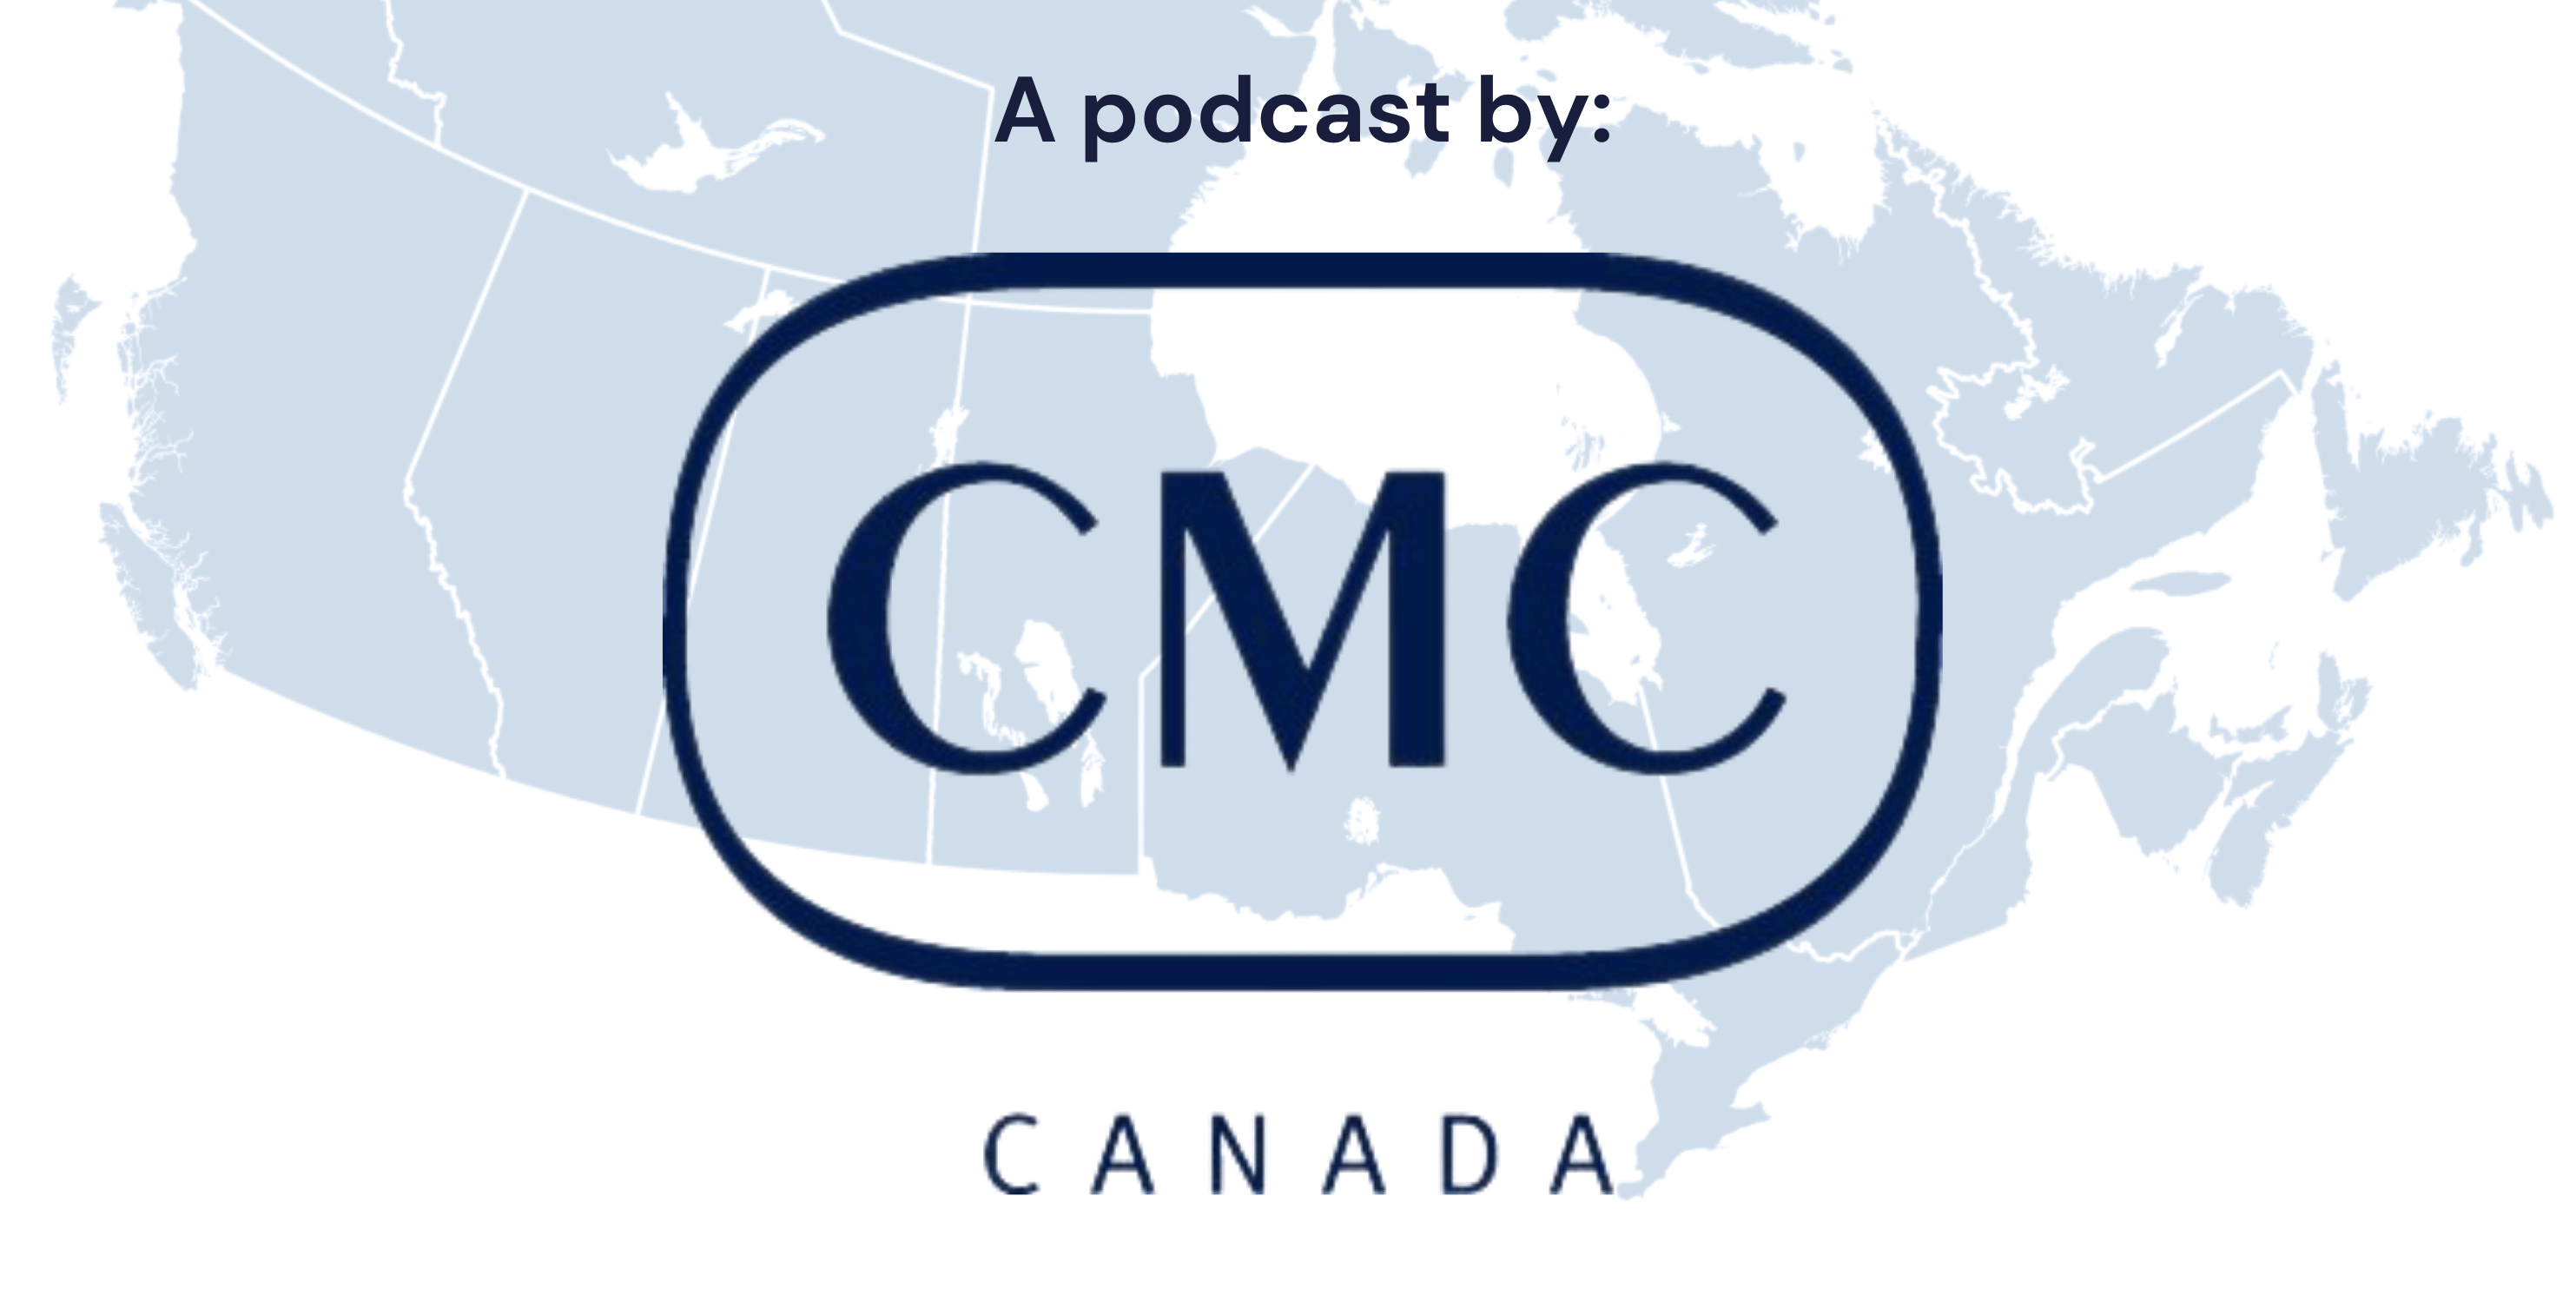 CMC-Canada Podcast: Episode 7 Released